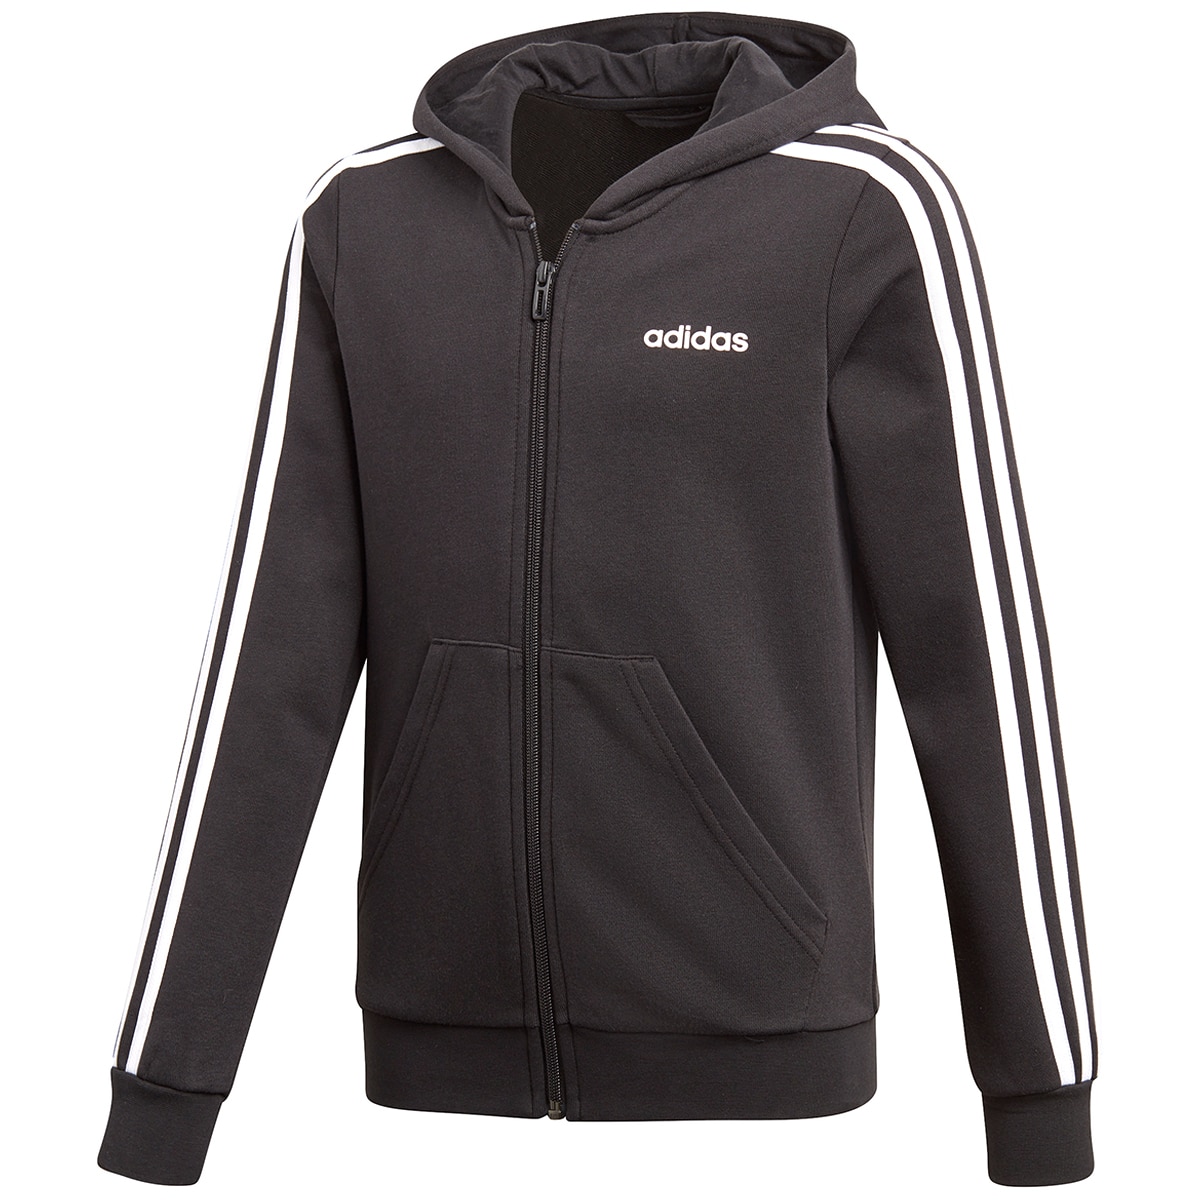 Adidas Girls' 3S Full Zip Hooded Jacket - Black/White